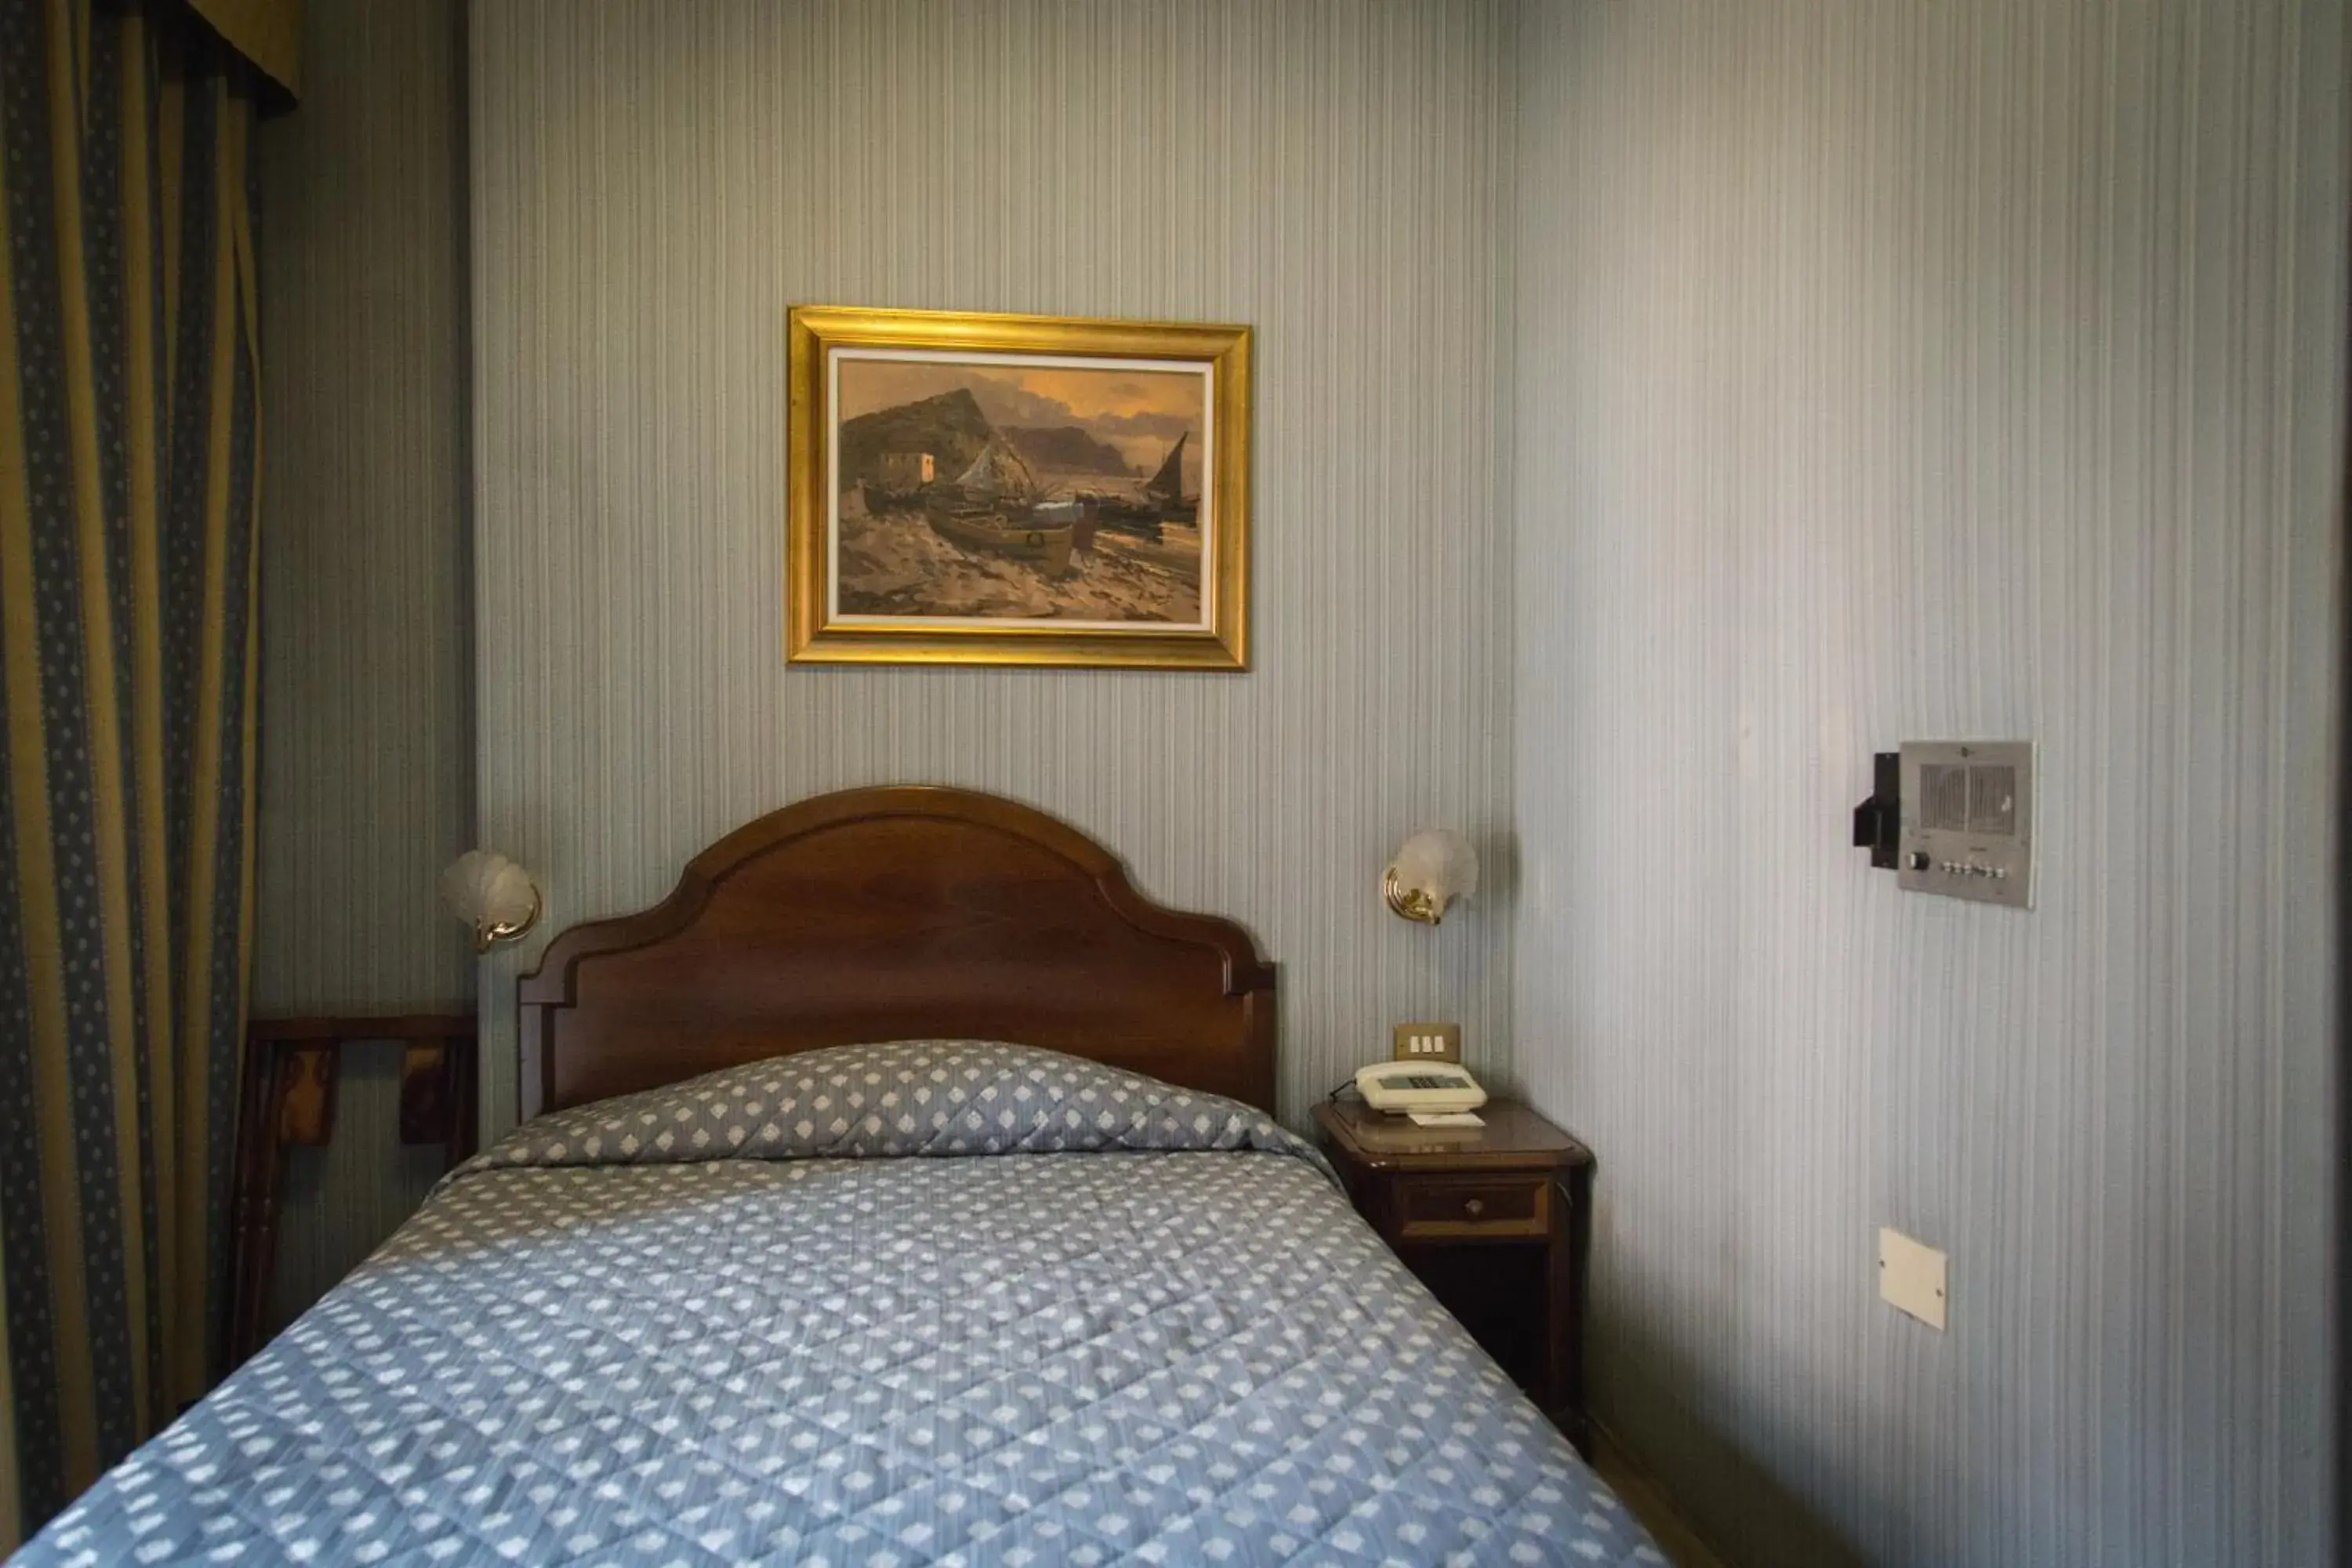 Bed, Room Photo in Hotel Accursio